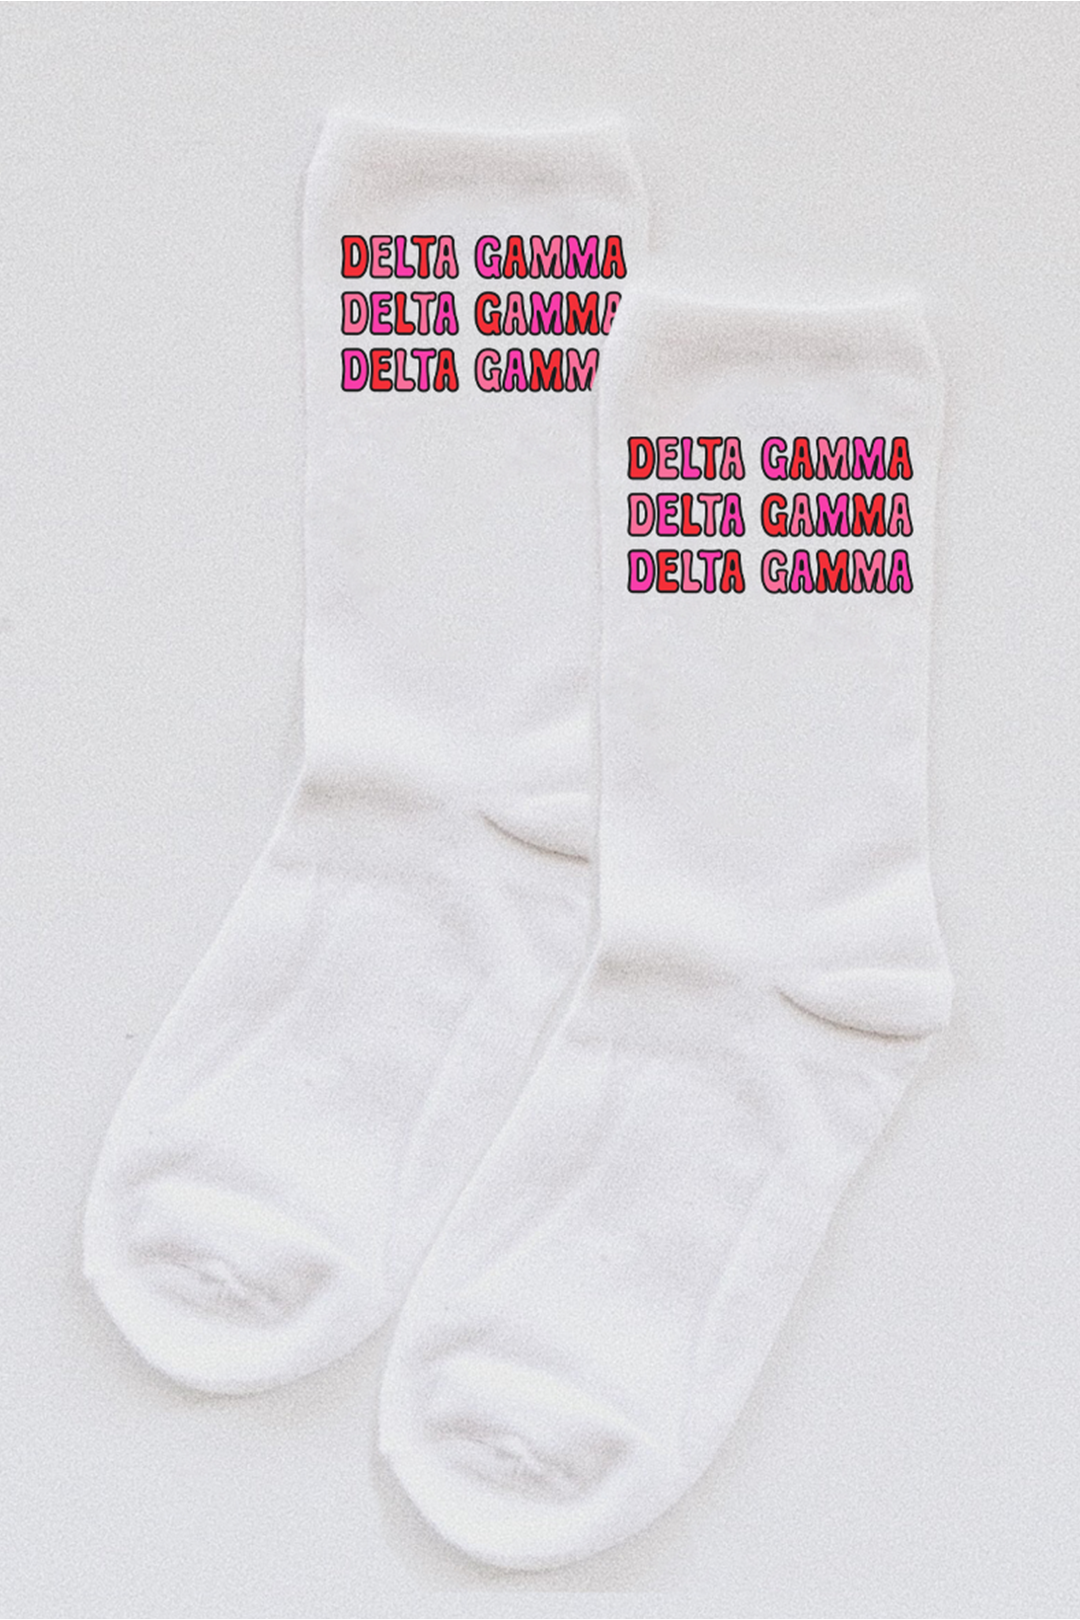 Pink Bubble Letter socks - Delta Gamma